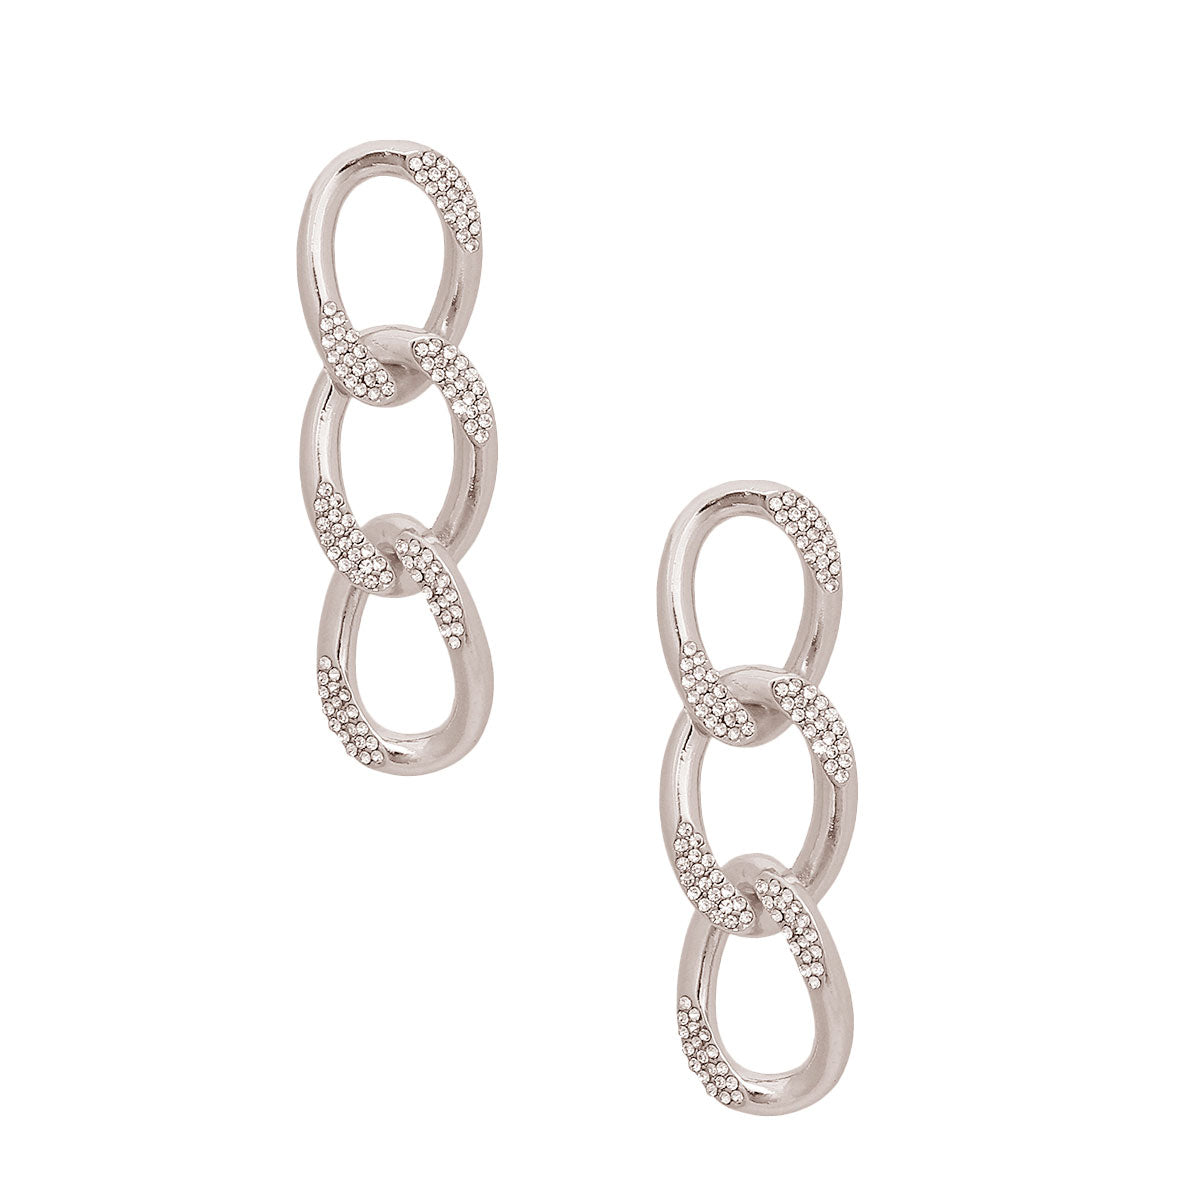 Silver Crusted Rhinestone Link Earrings